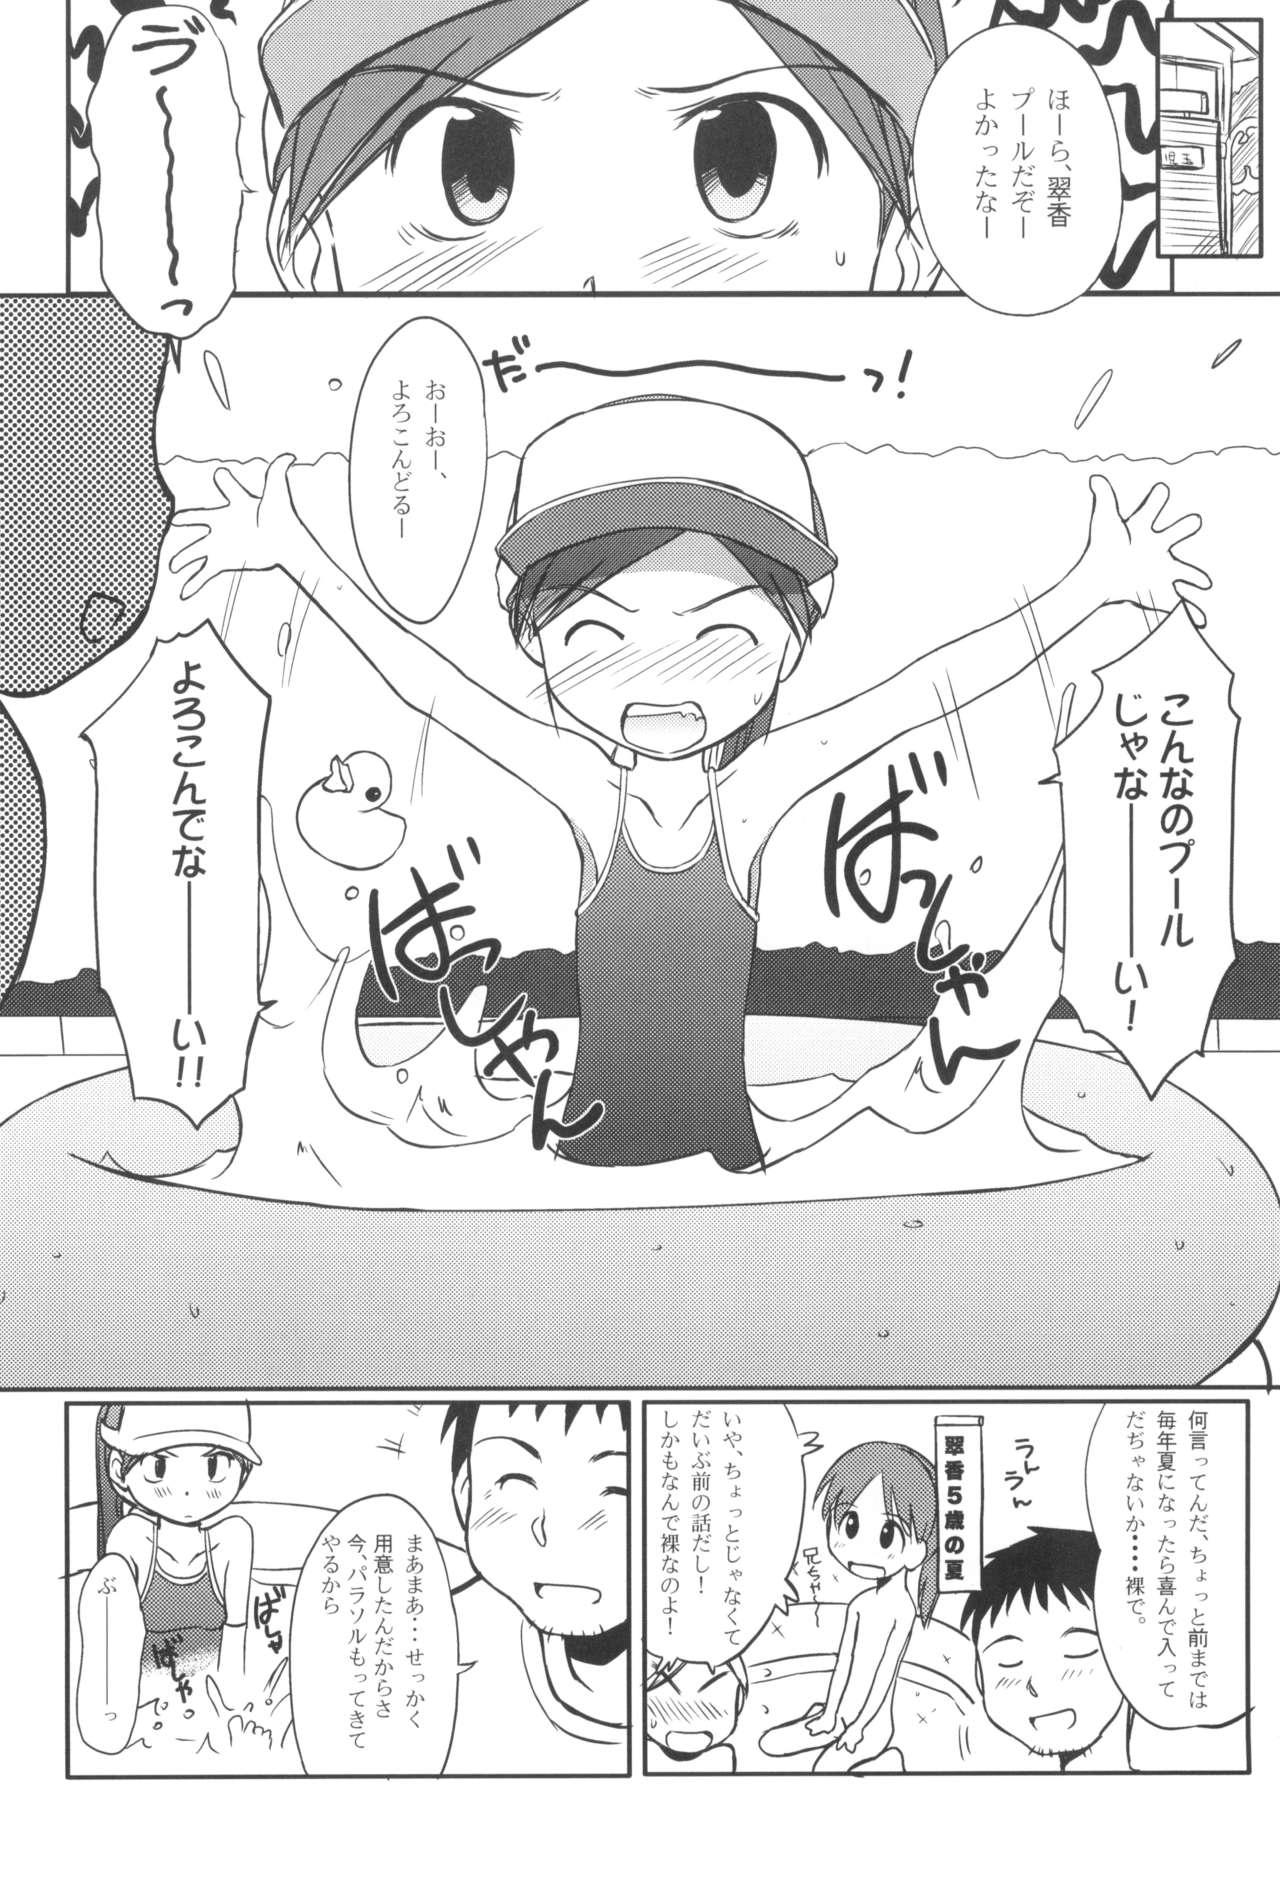 Funny Suisuisuika - Original Time - Page 6